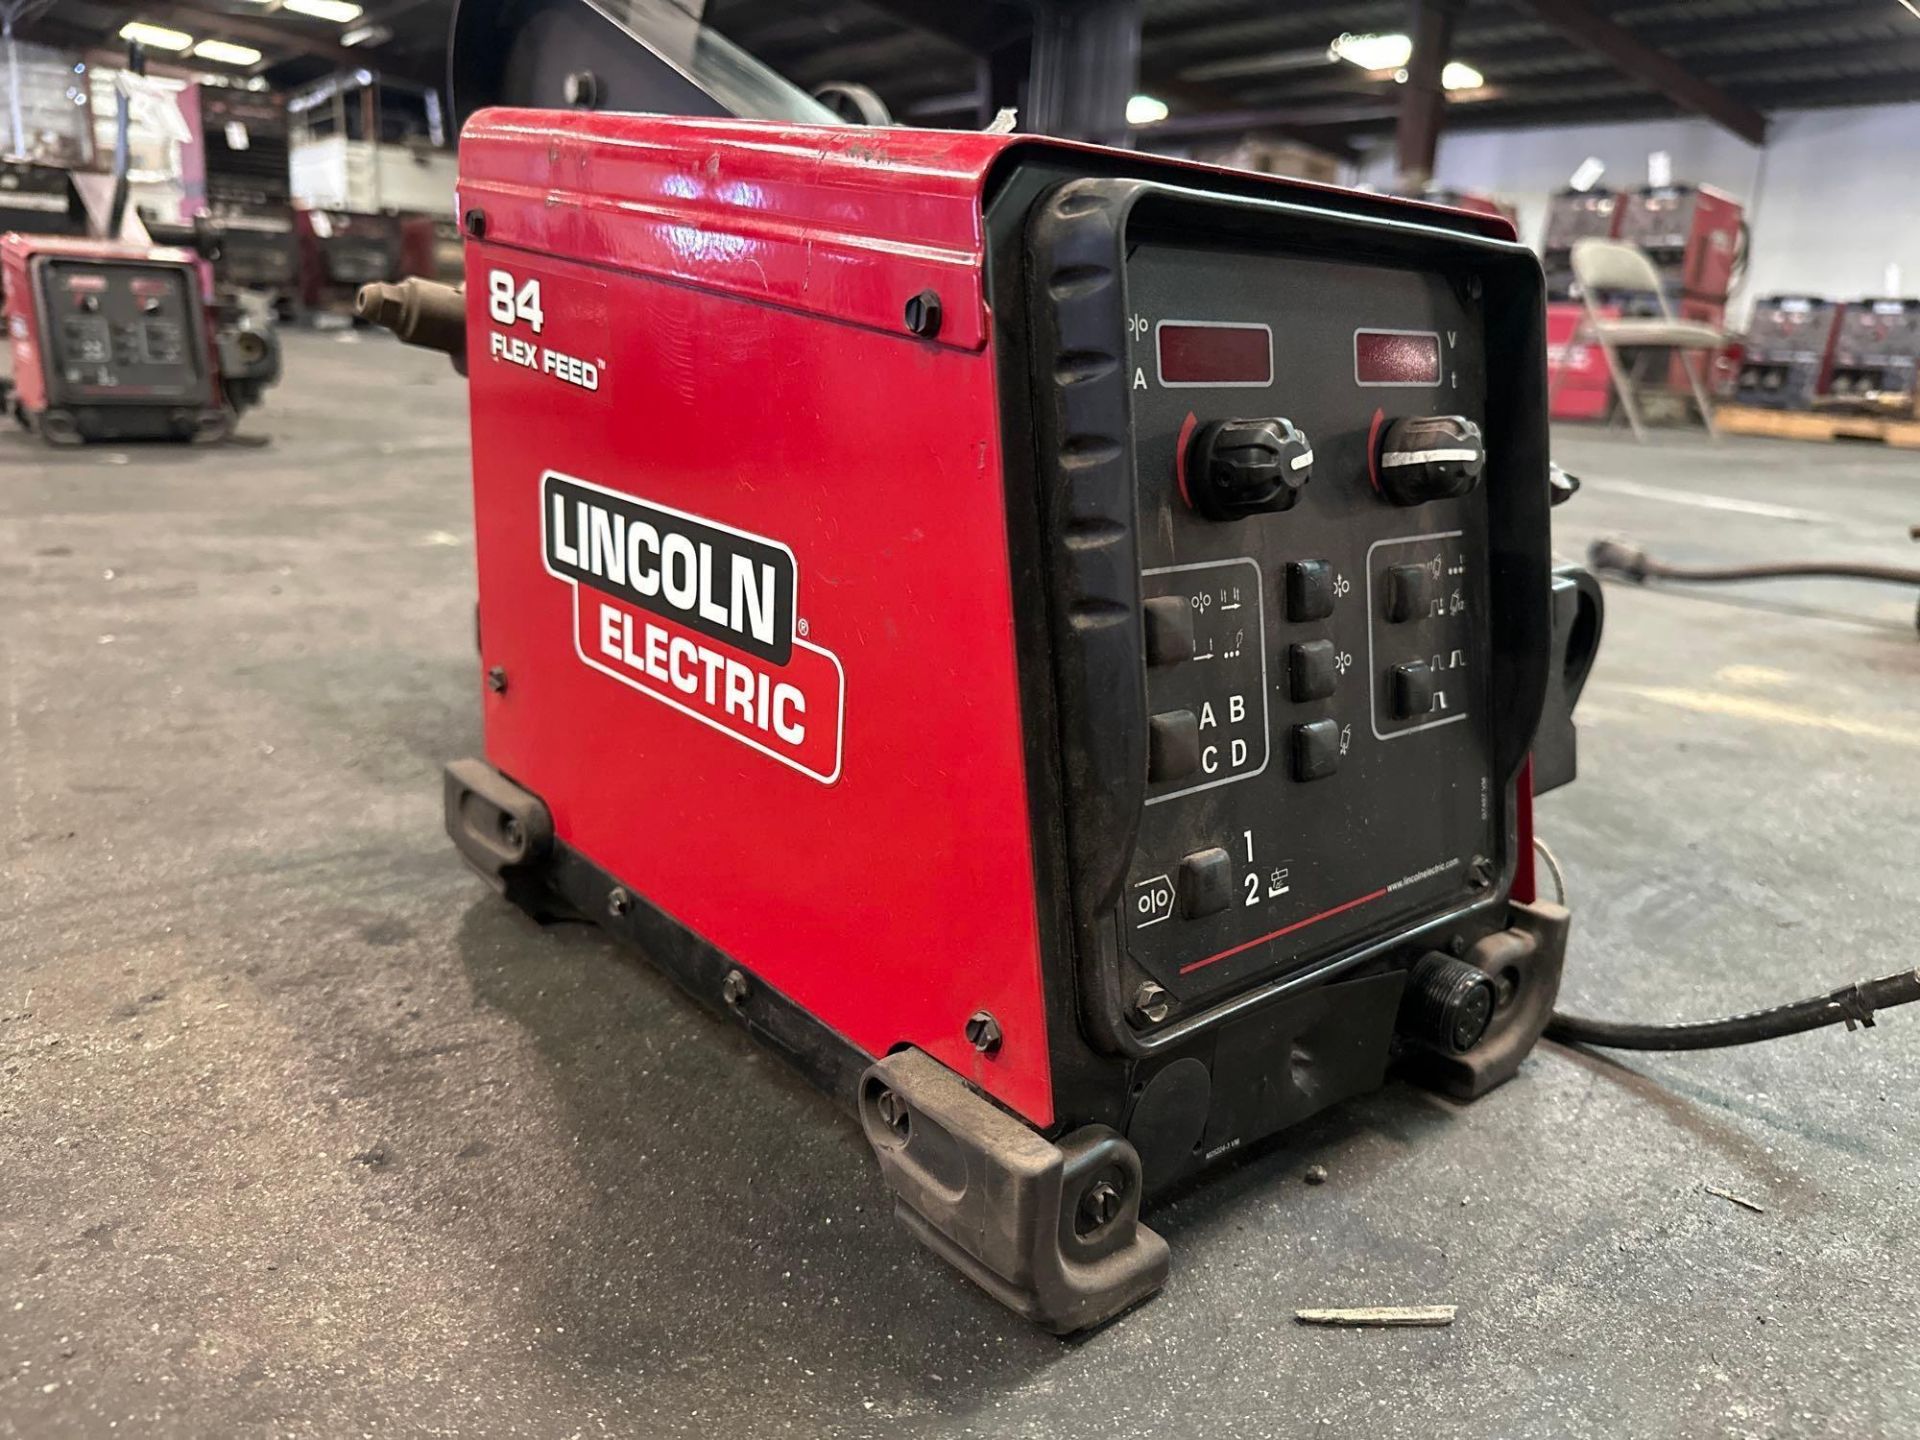 Lincoln Electric 84 Flex Feed Wire Feeder, s/n U1210705266 *Located in Redlands, CA*